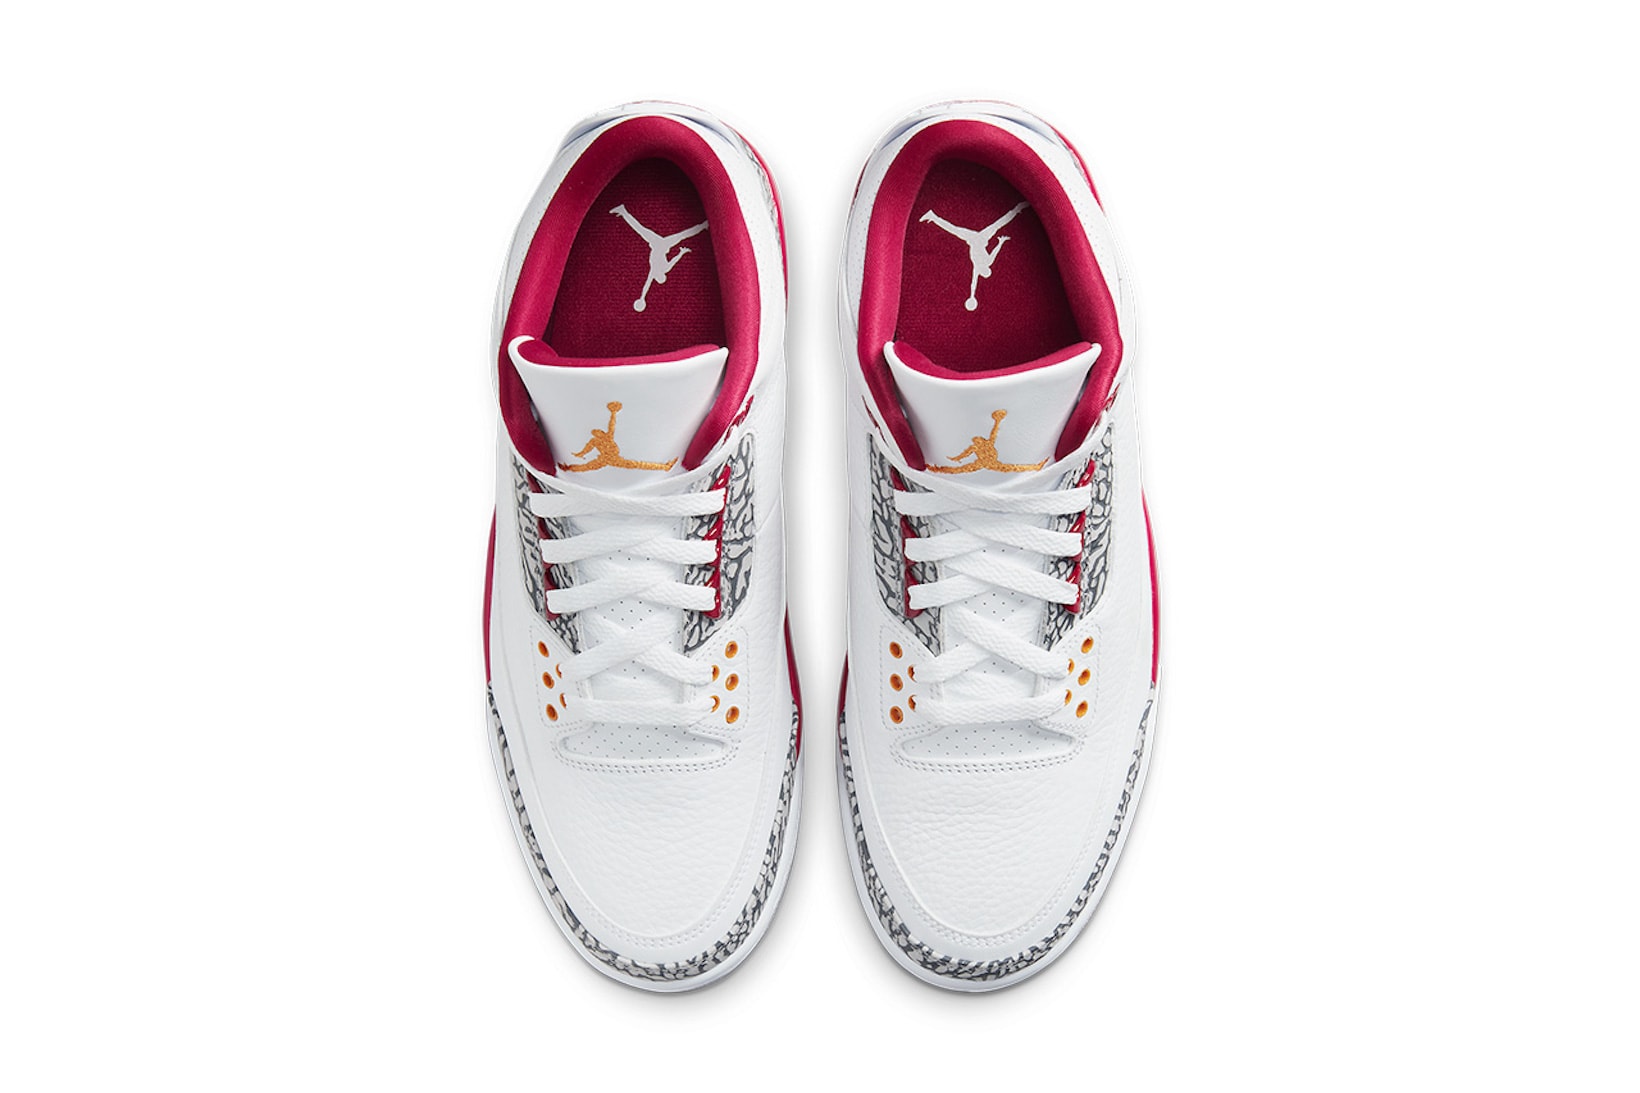 Nike Air Jordan 3 AJ3 Cardinal Red White Sneakers Footwear Shoes Kicks